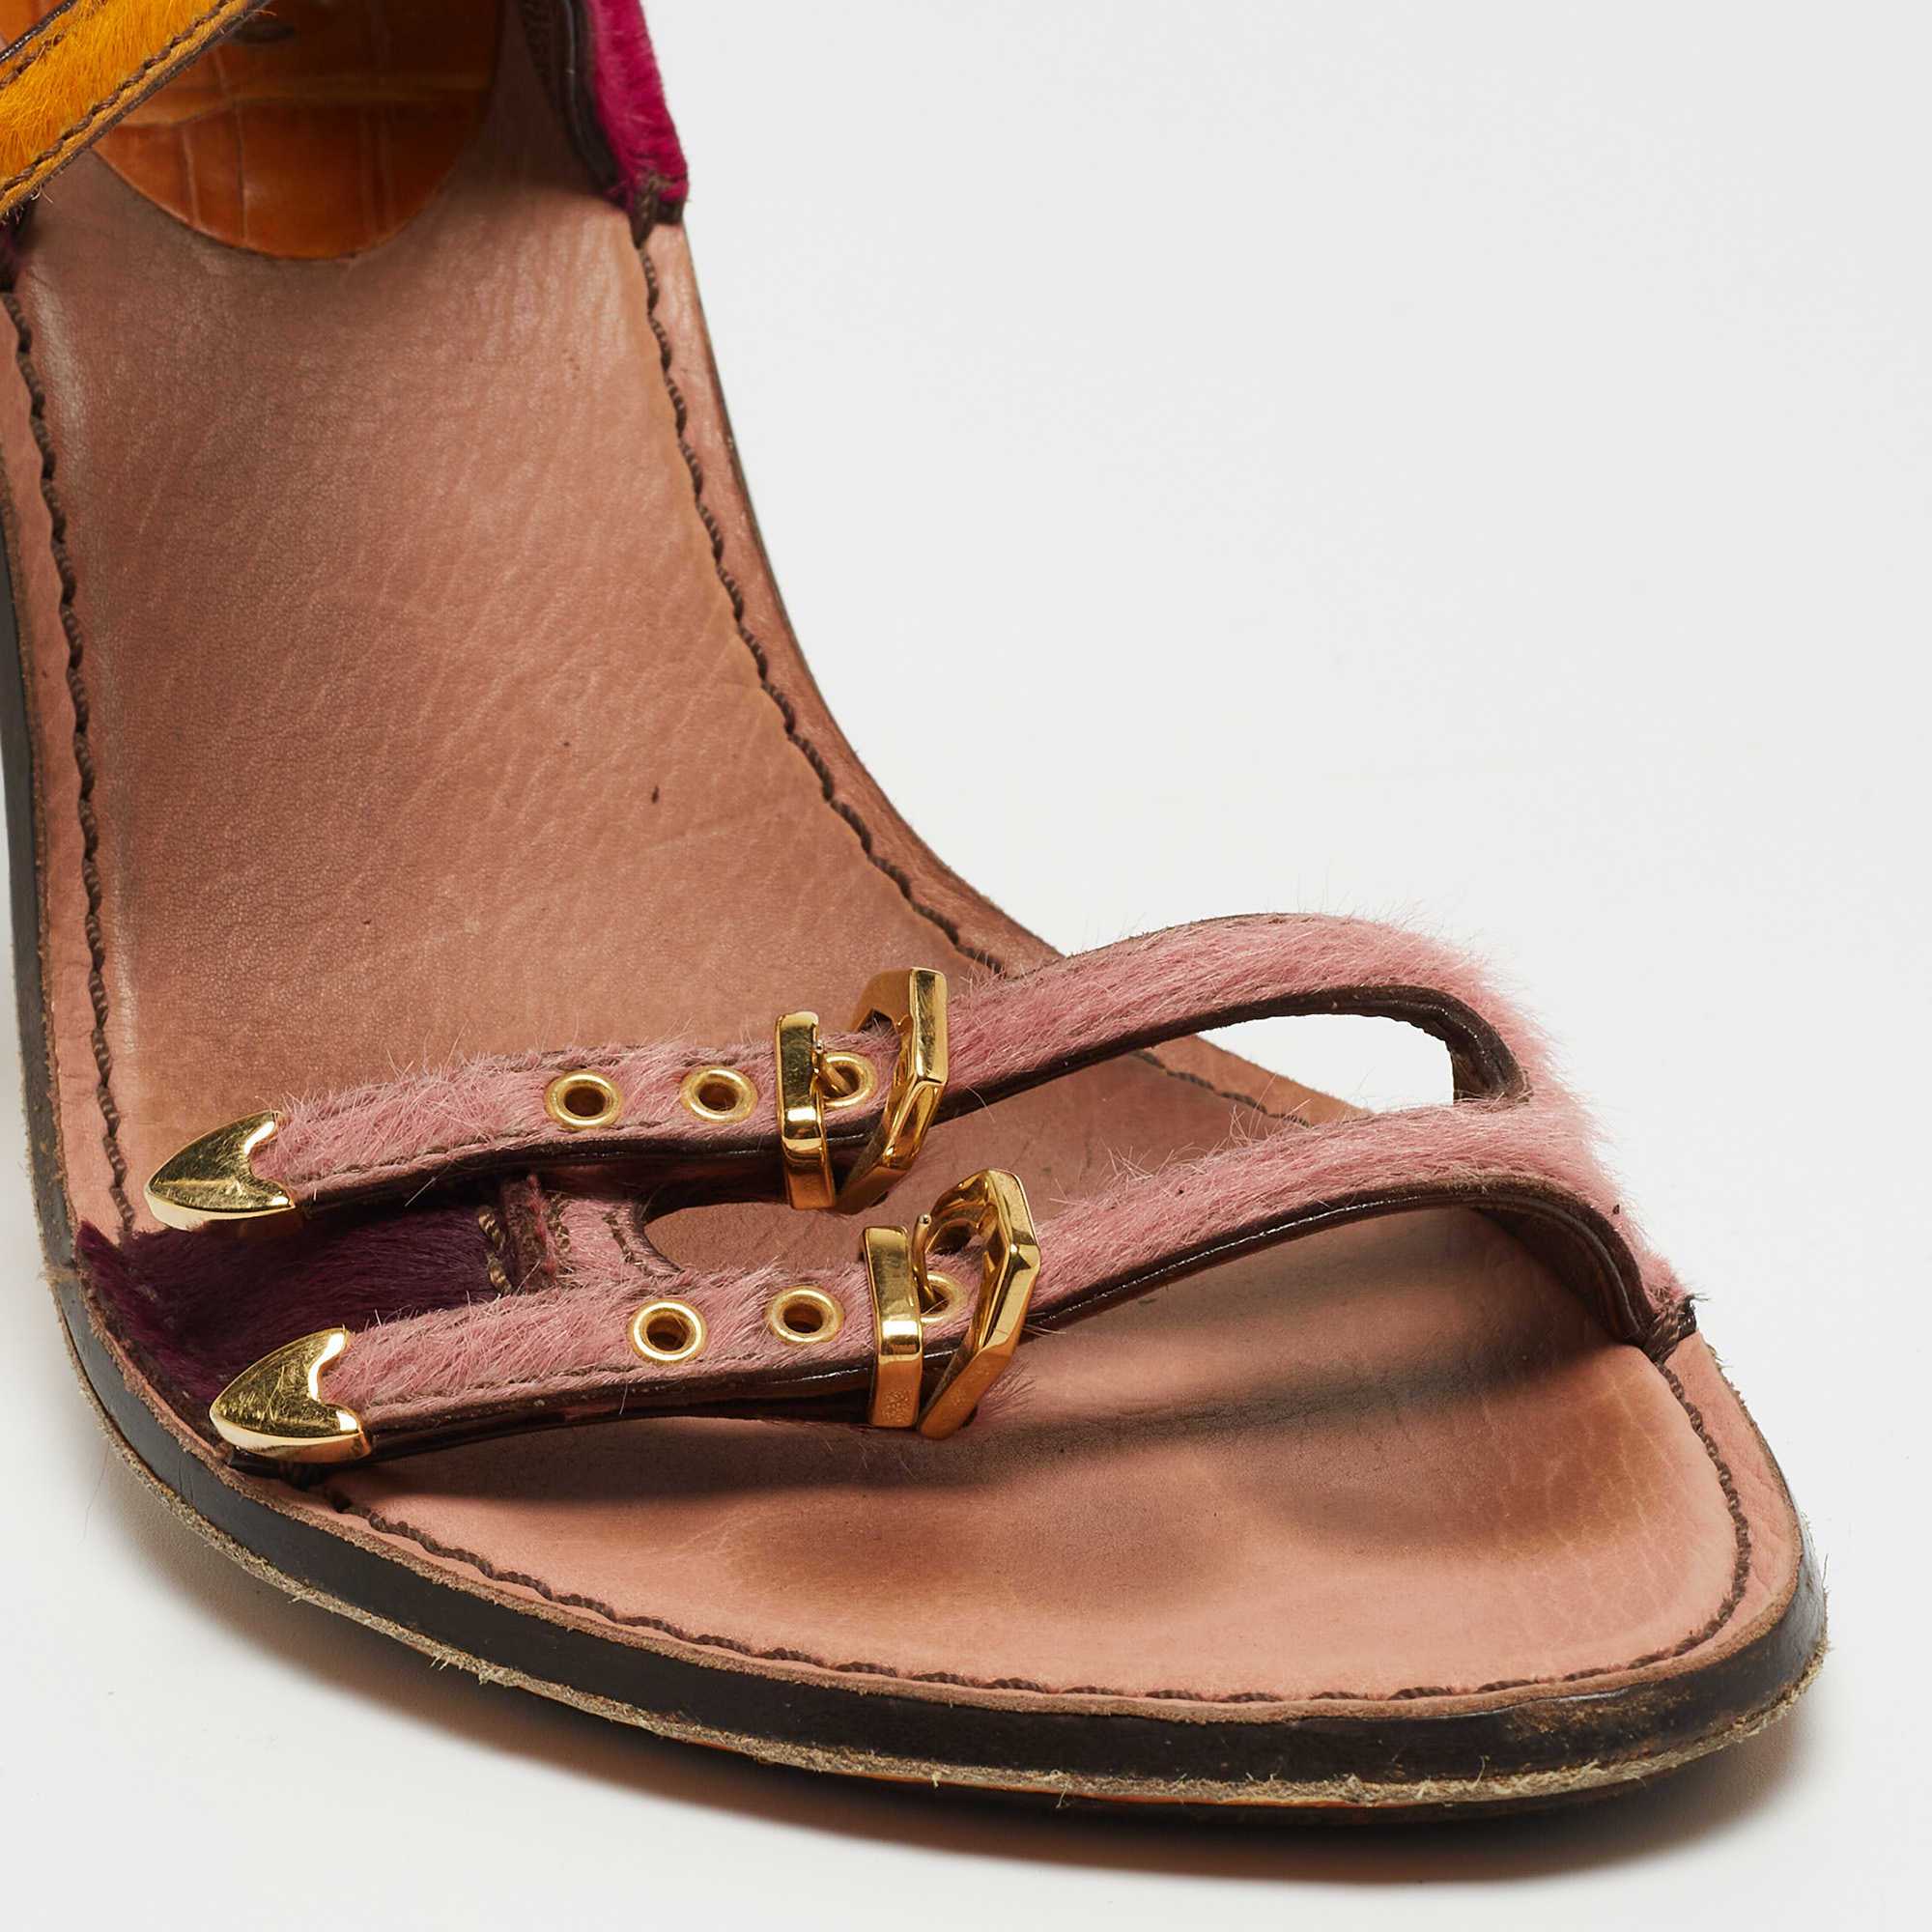 Louis Vuitton Multicolor Calf Hair Buckle Detail Strappy Sandals Size 40